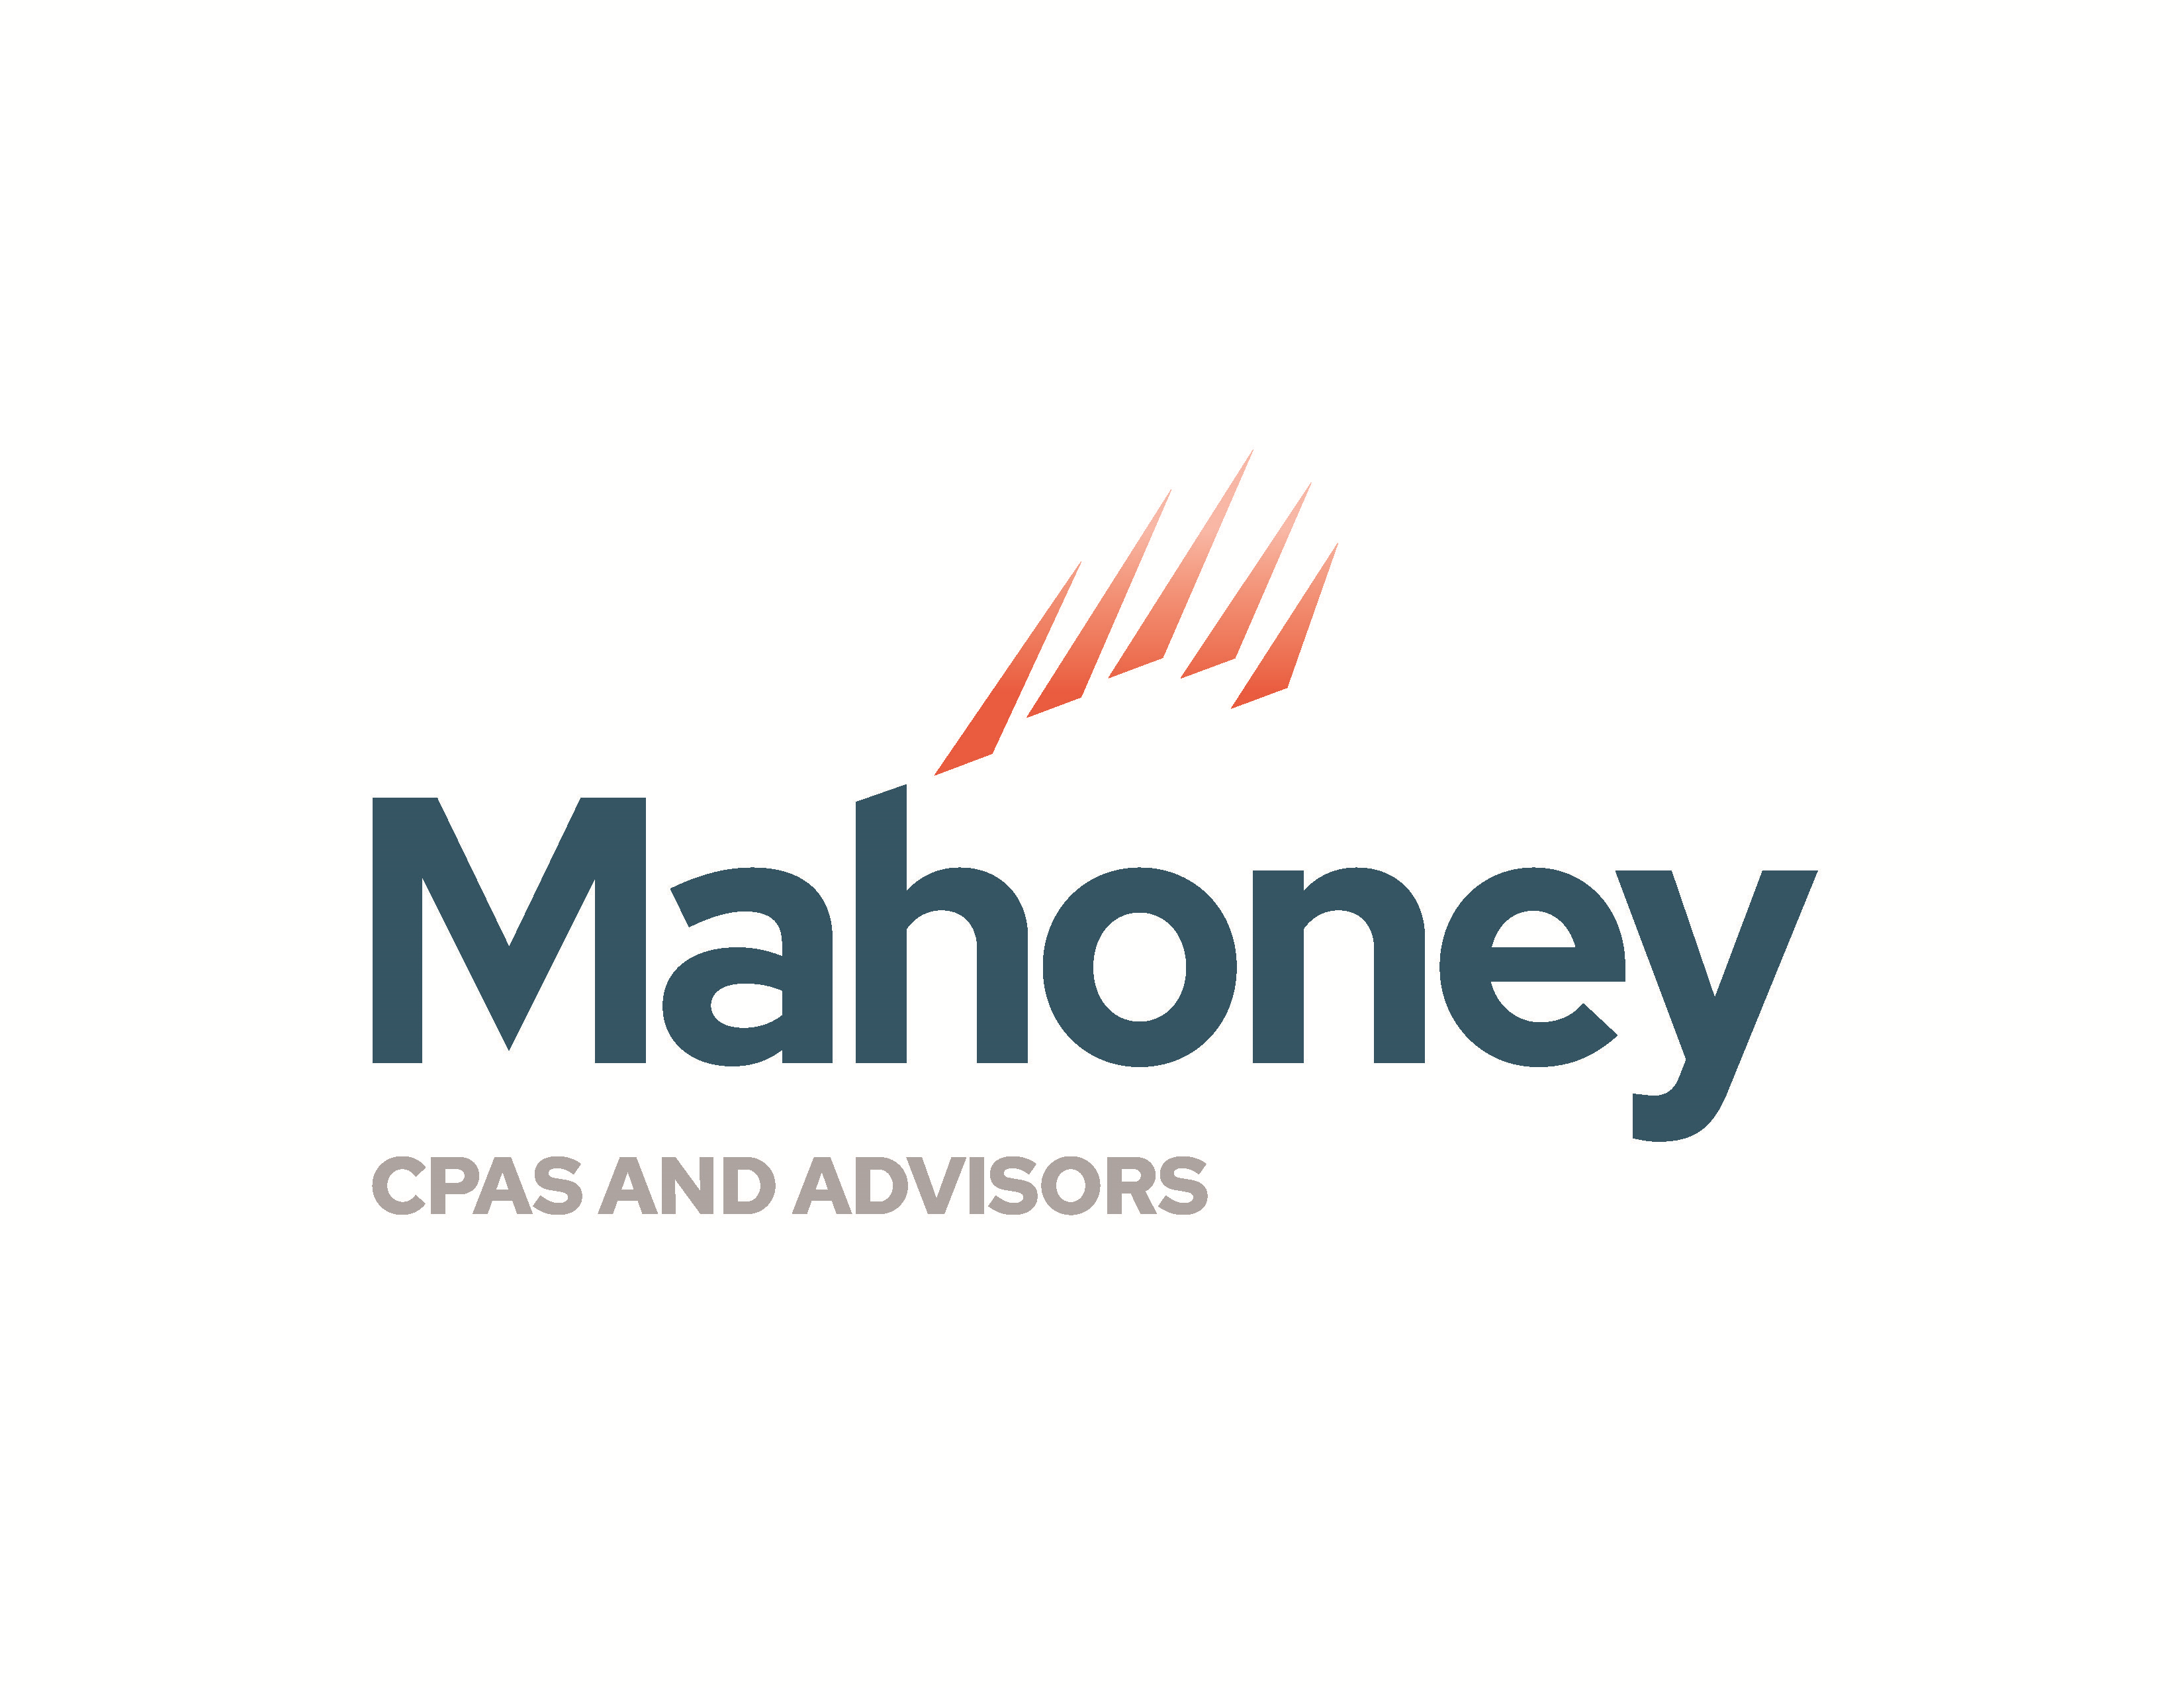 Mahoney CPAS and Advisors logo